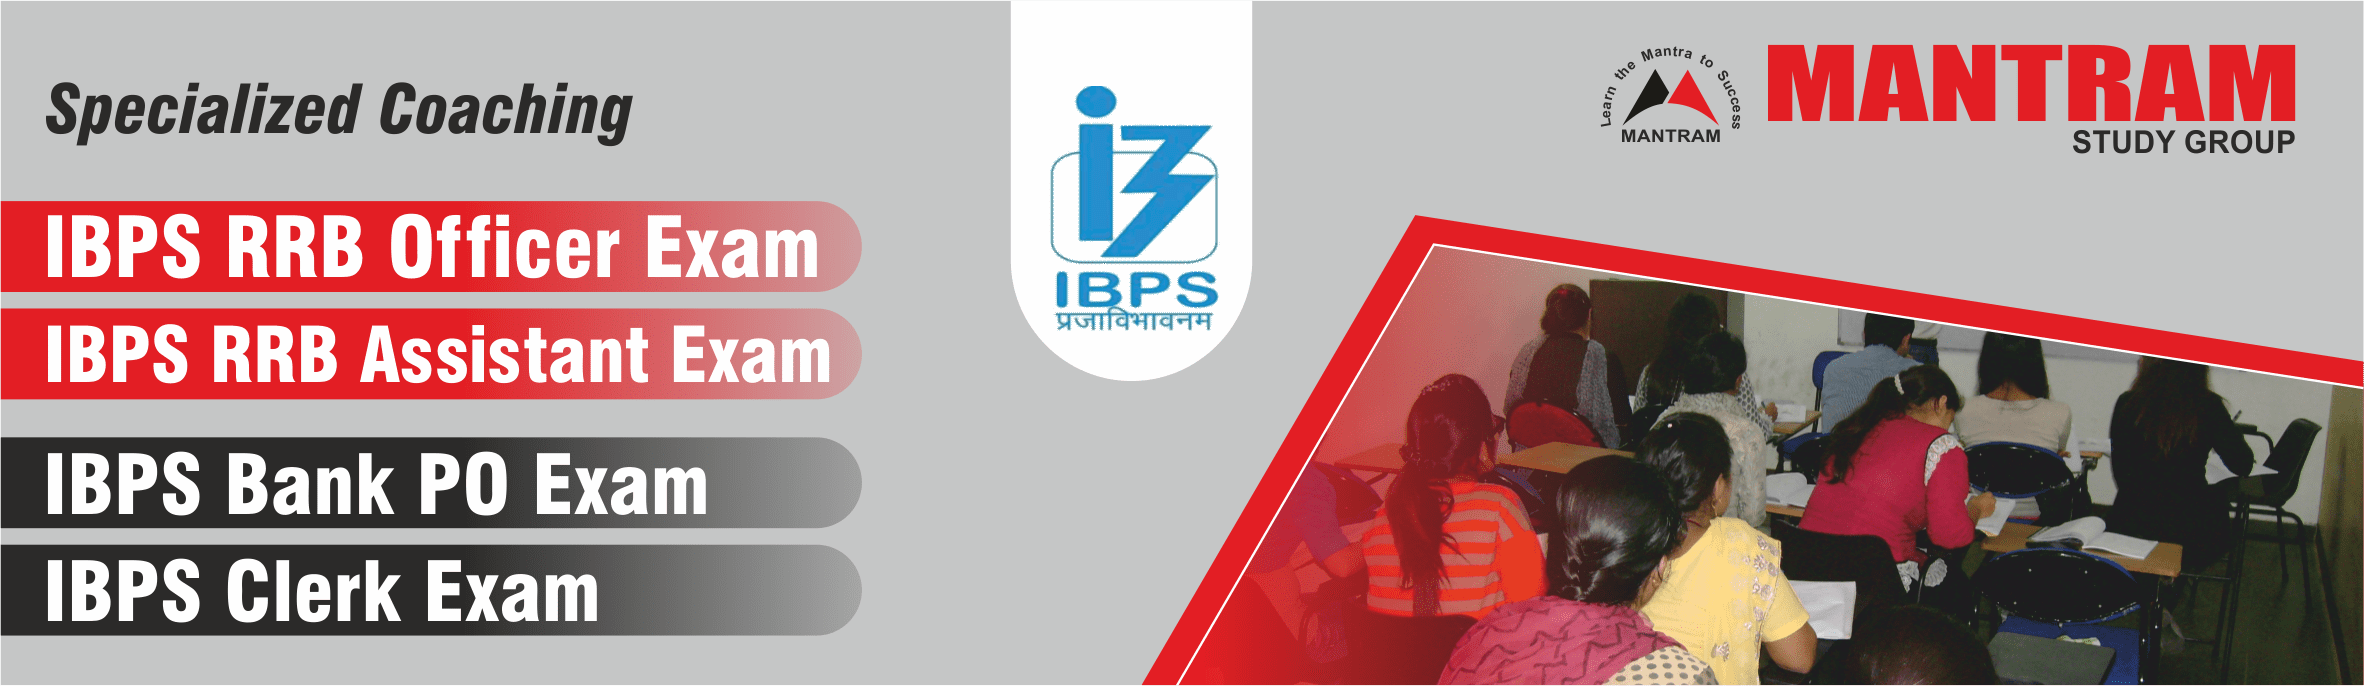 IBPS Recruitment Coaching in Chandigarh